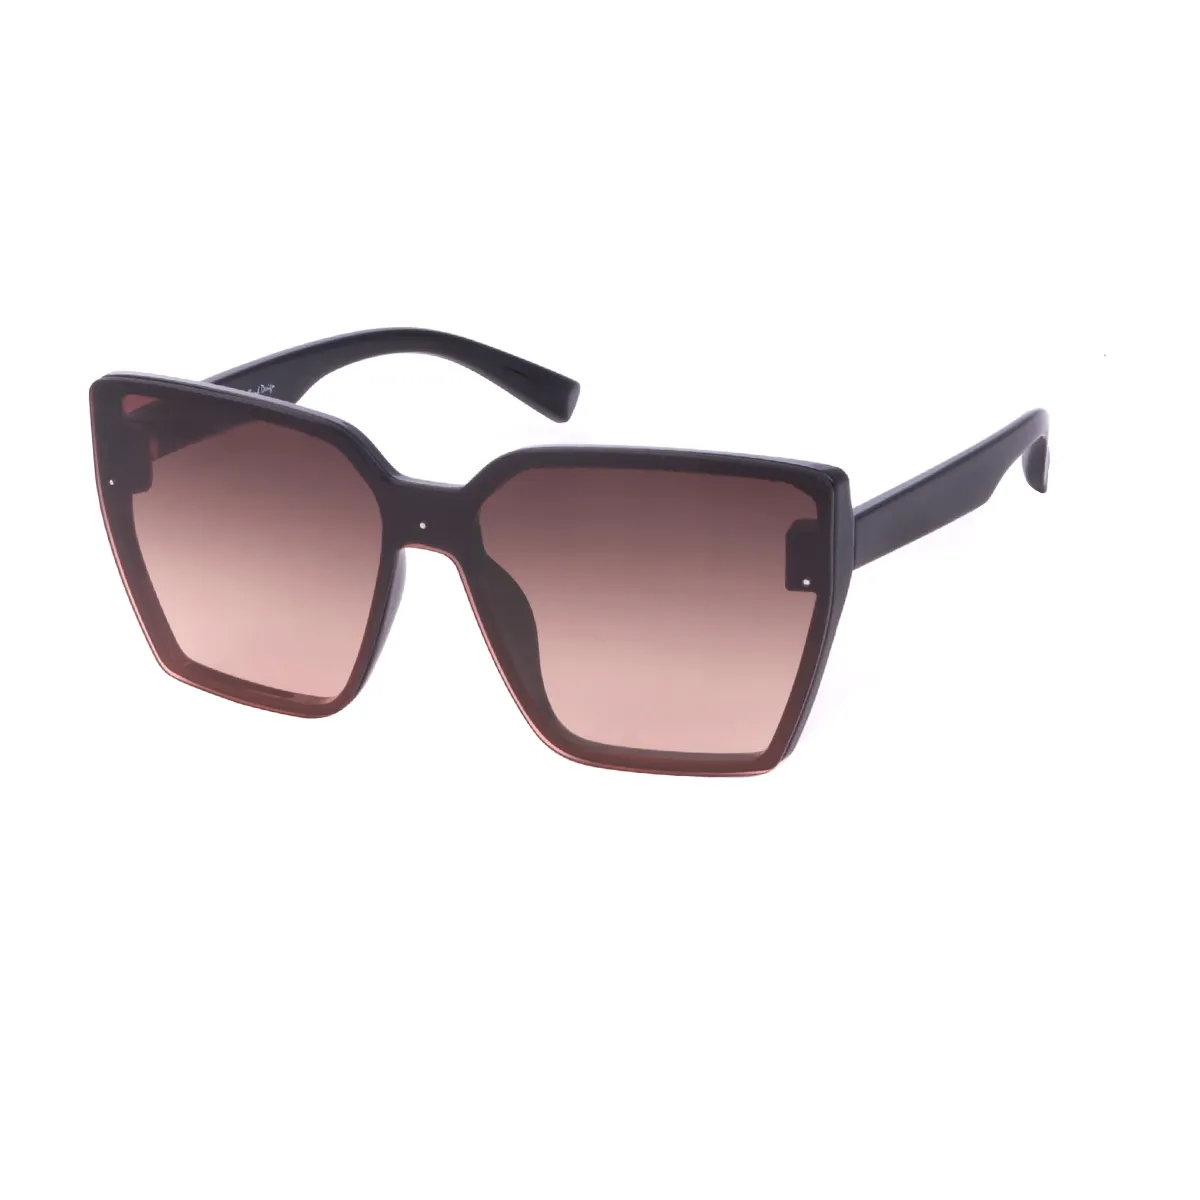 Cara - Square Black Sunglasses for Women